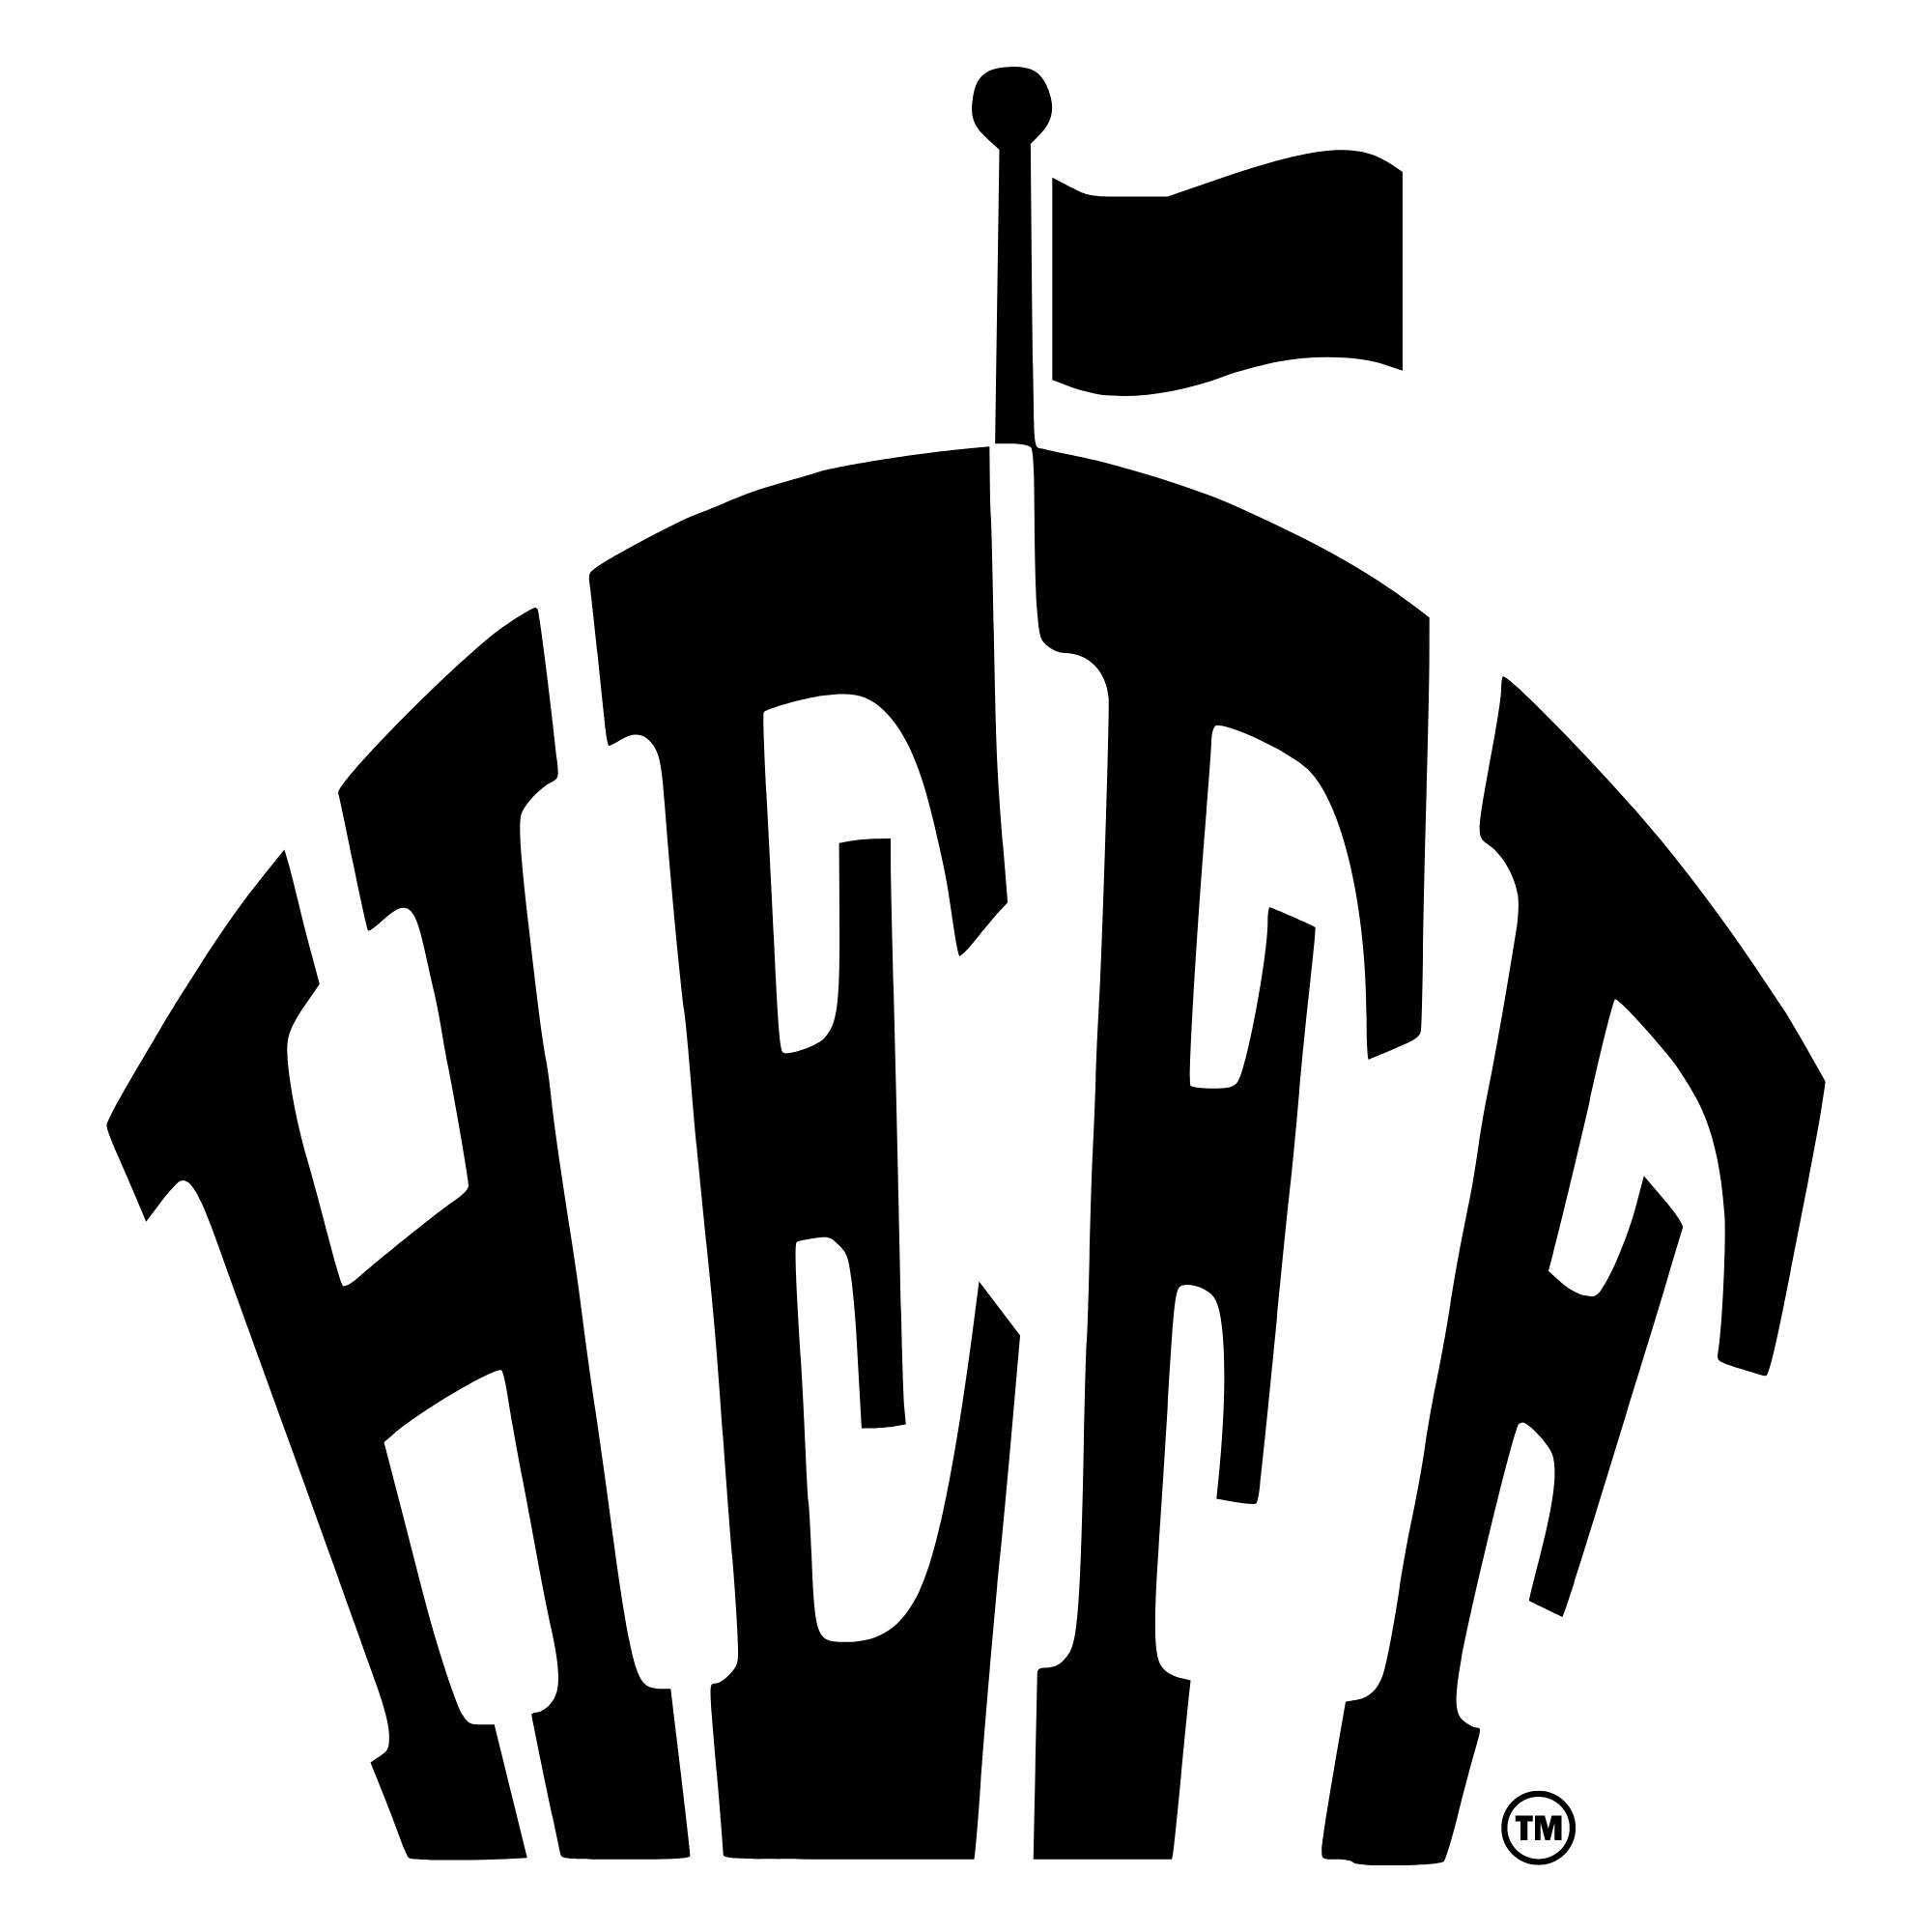 HEFF logo in black